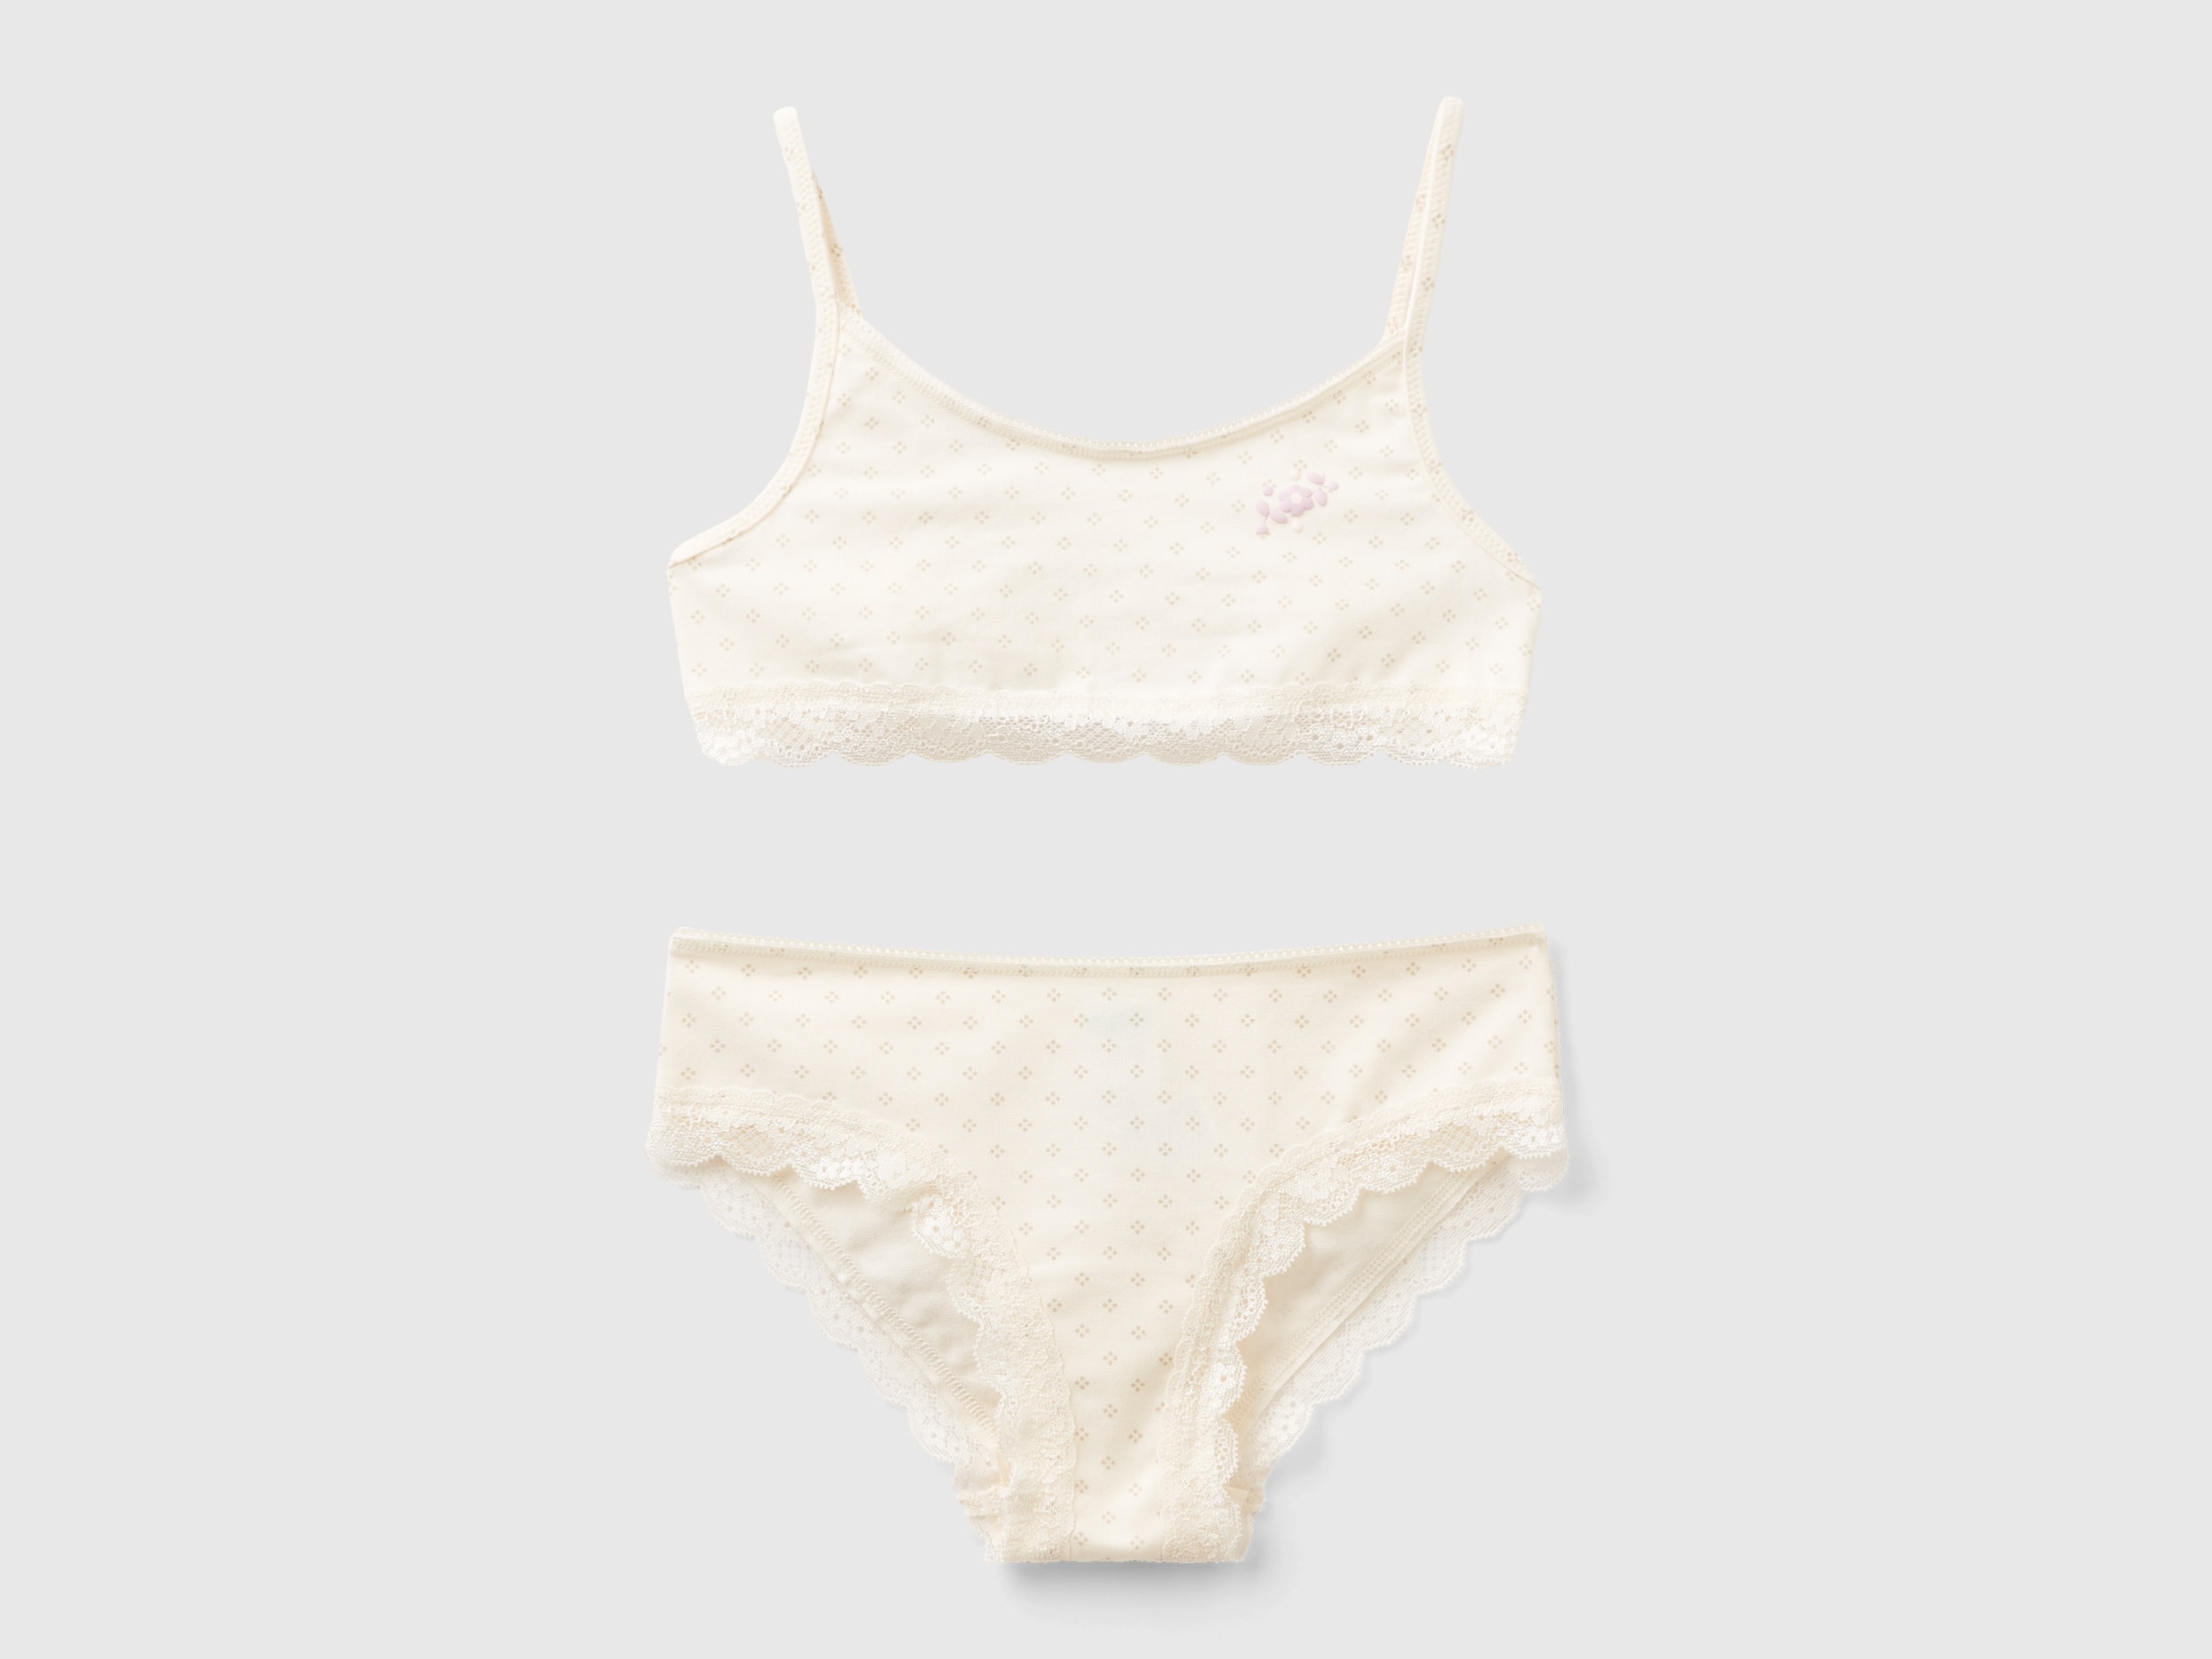 Benetton, Micro Pattern Top And Underwear Set, size XS, Creamy White, Kids